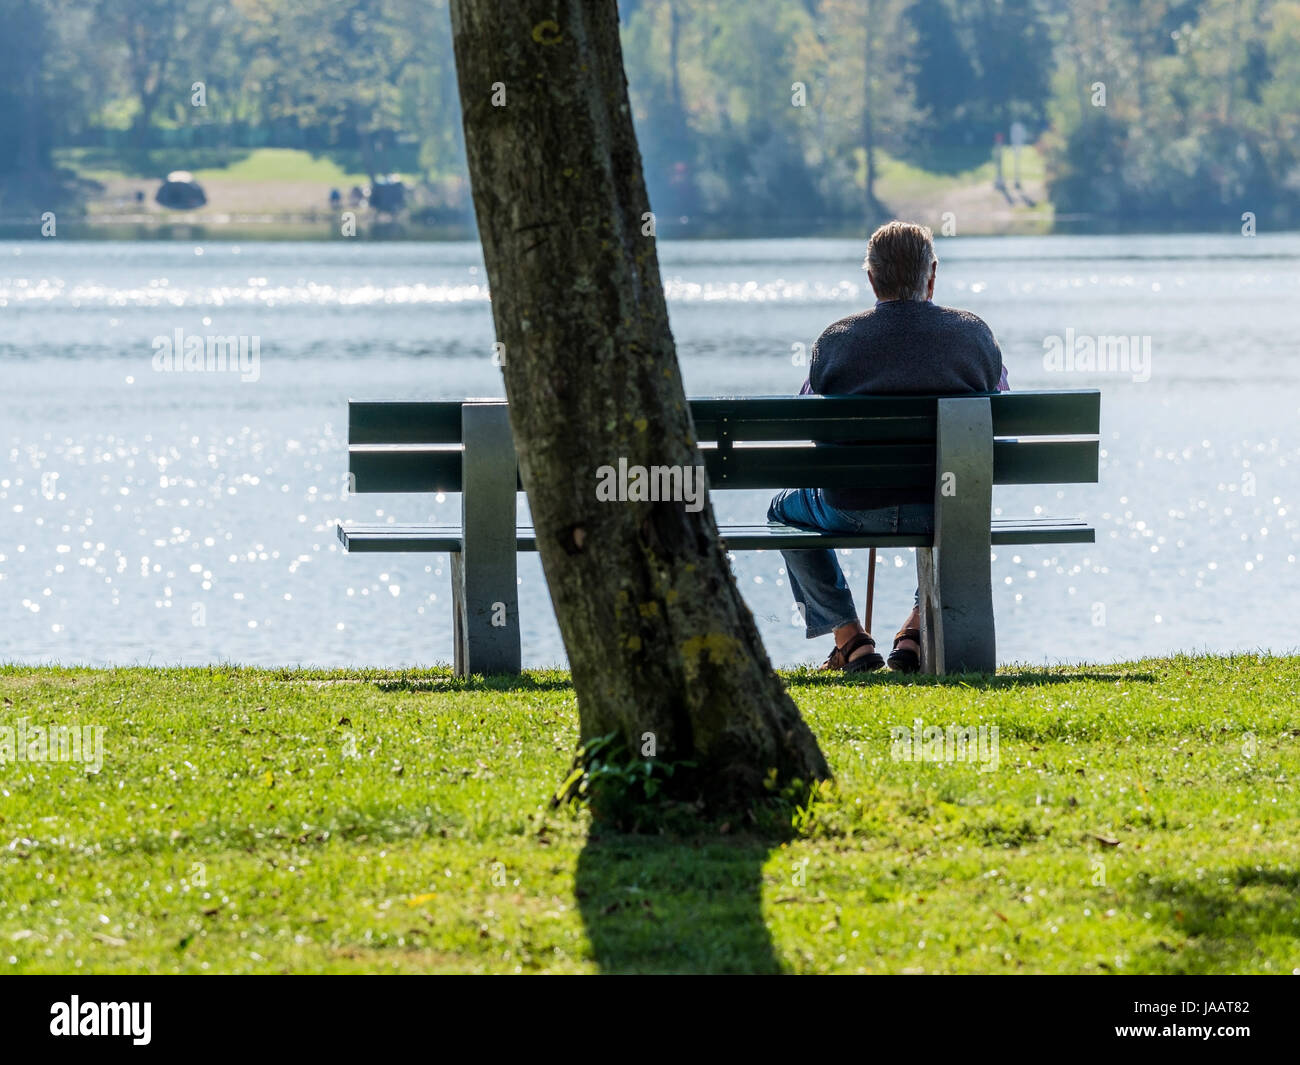 En un banco del parque con un lago, ahí se sienta solo un hombre mayor de edad., Auf einer Parkbank sitzt bei einem Ver einsam ein älterer Mann. Foto de stock